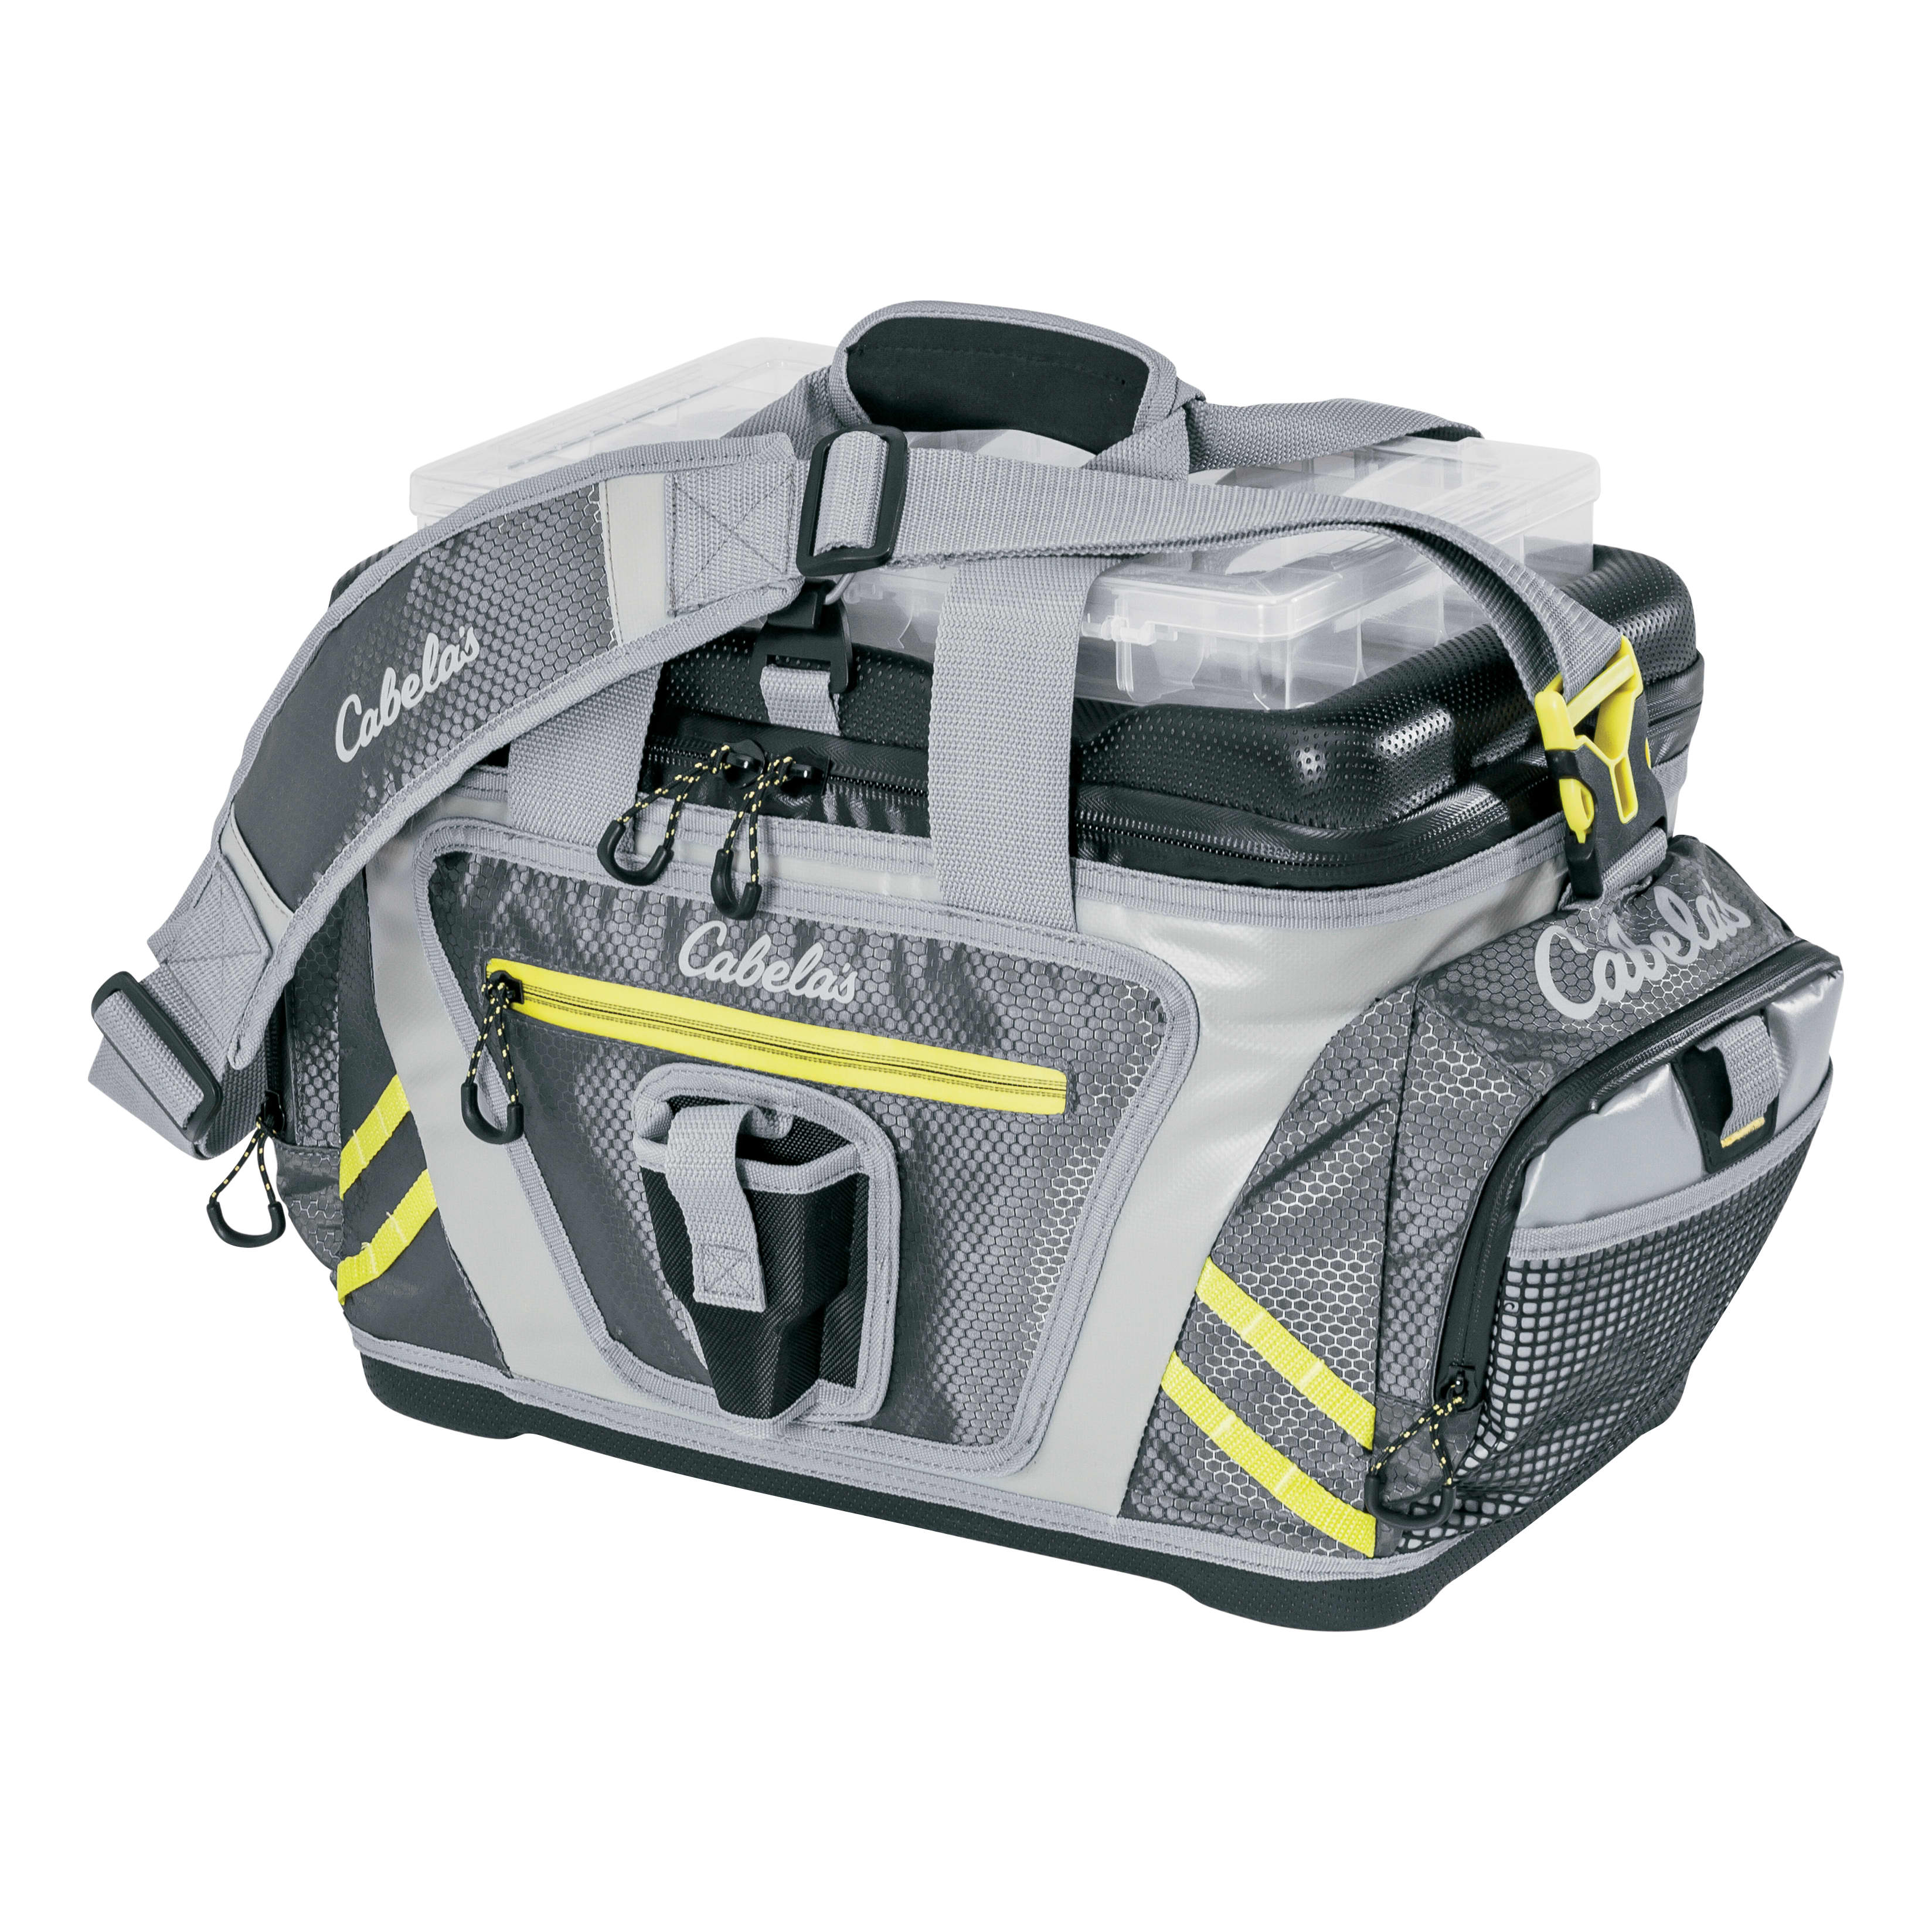 Cabela's Marine-Grade Tackle Bag with Utility Box - Angle View